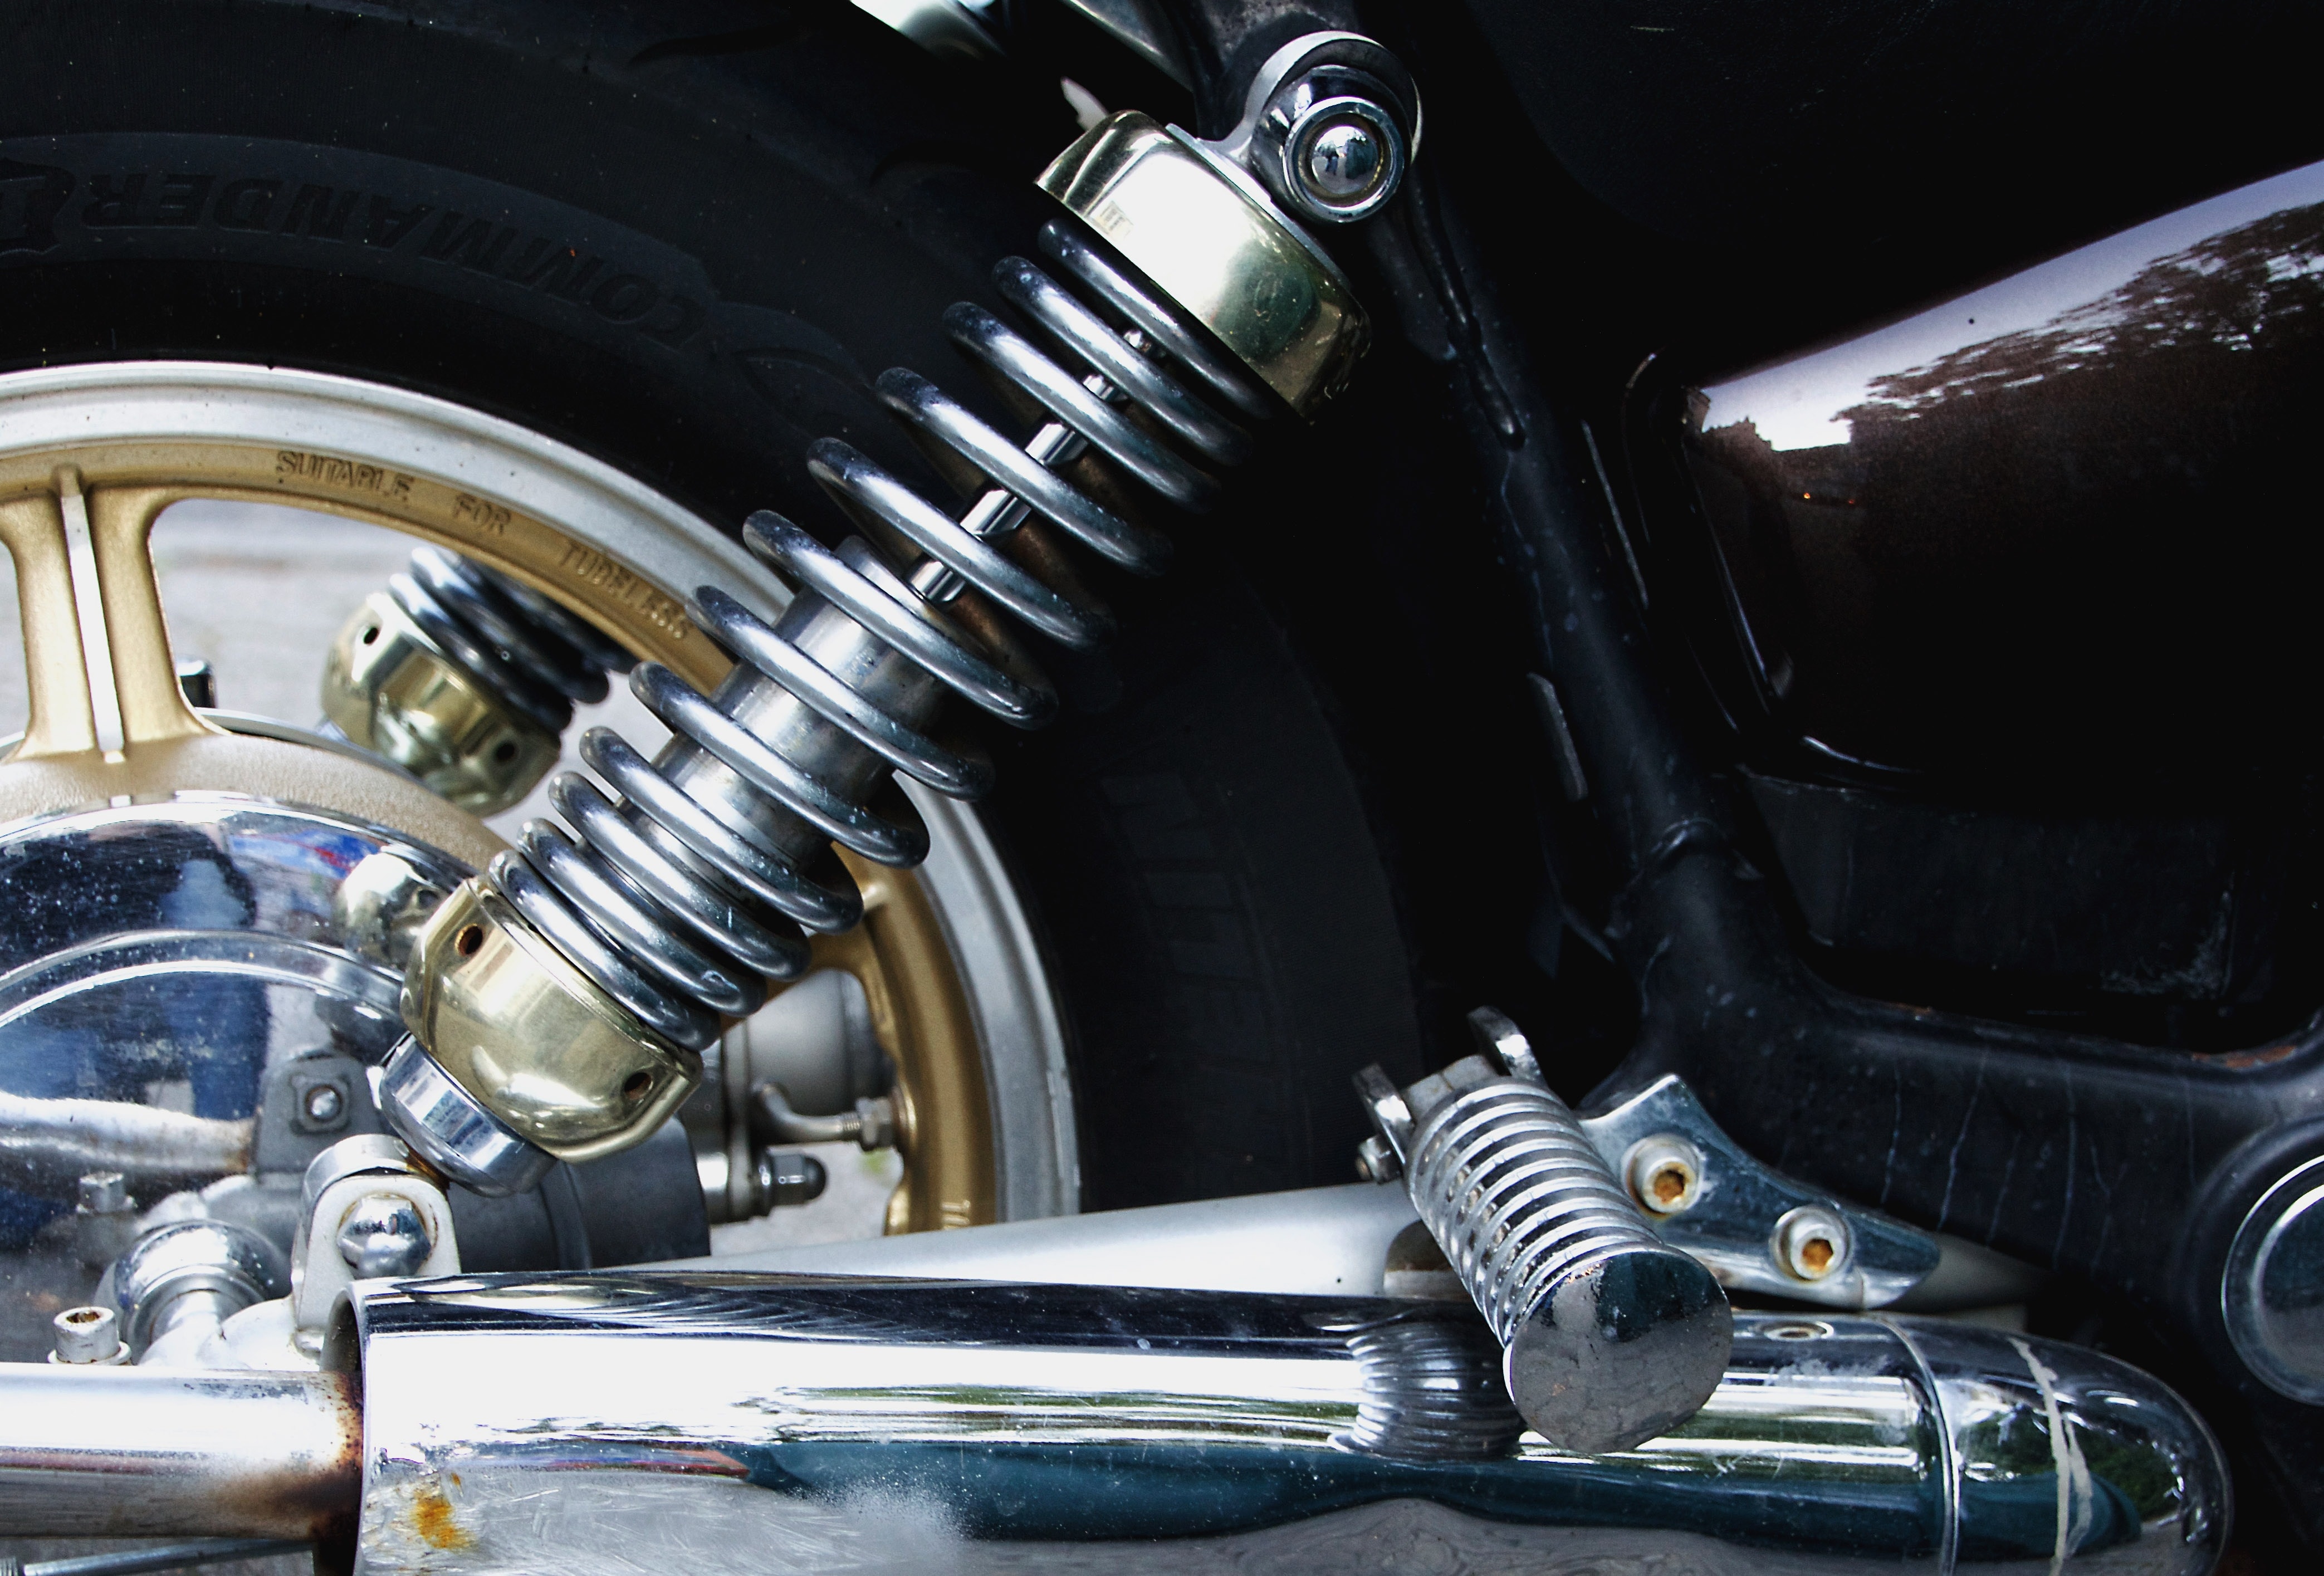 motorcycle shock absorber